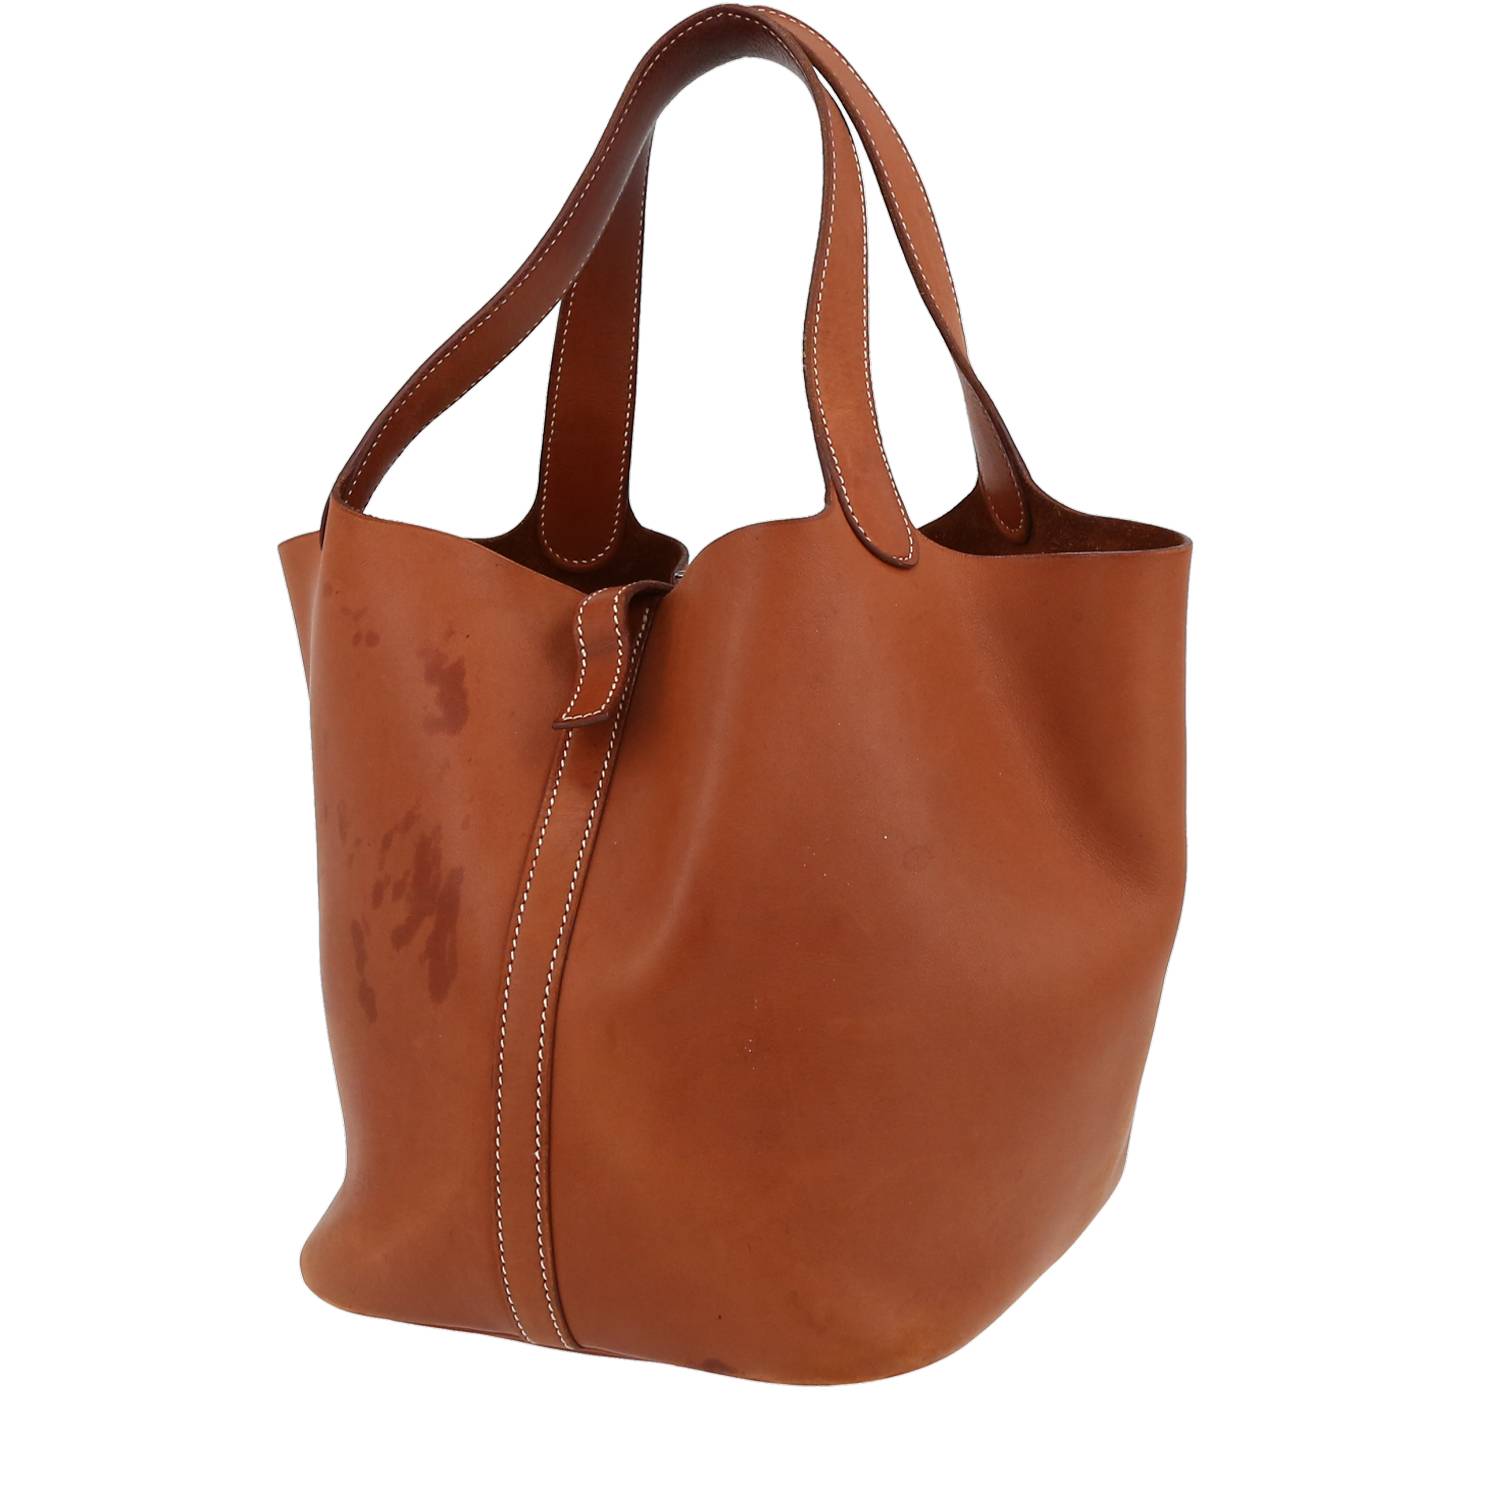 Leather Bag Strap For Picotin Bucket Bag Convert to Shoulder etoupe etain  L2 | eBay